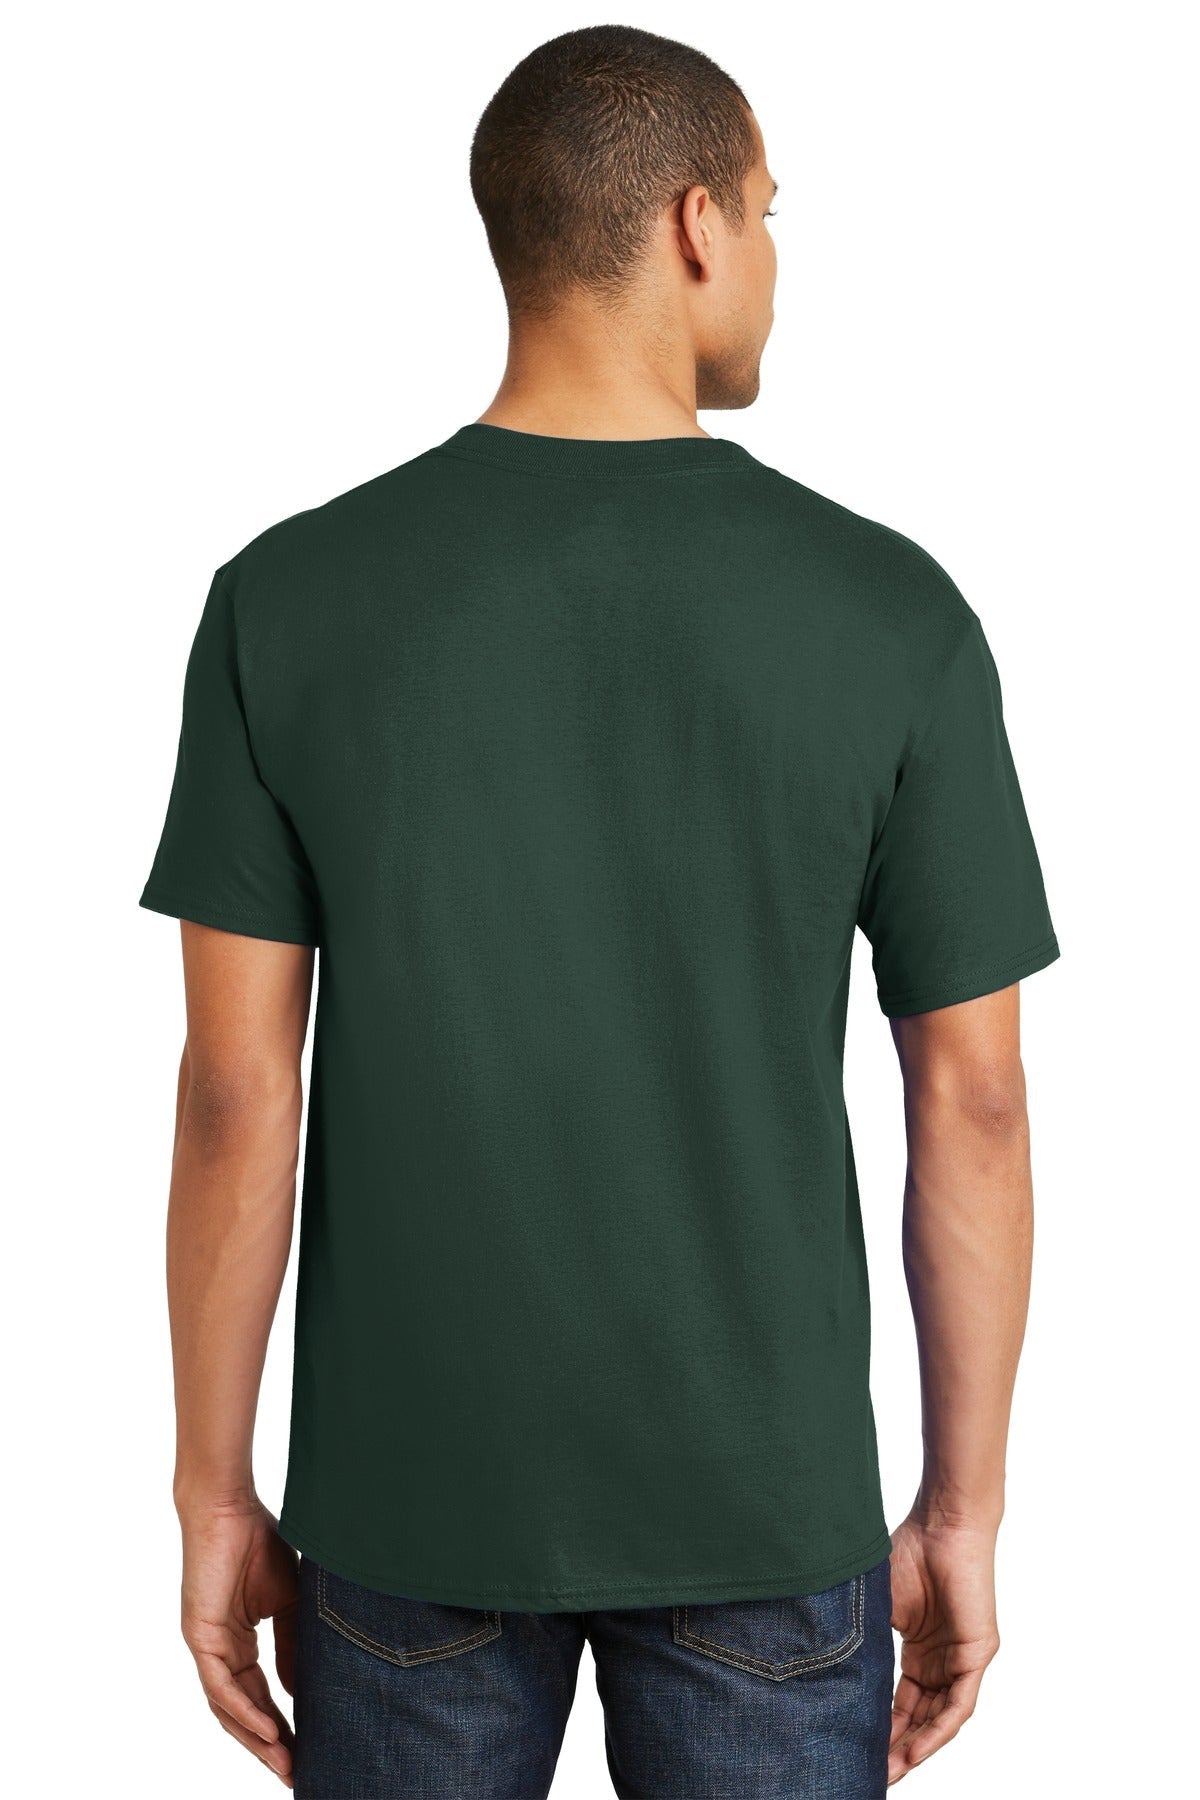 Hanes® Beefy-T® - 100% Cotton T-Shirt. 5180 [Deep Forest] - DFW Impression